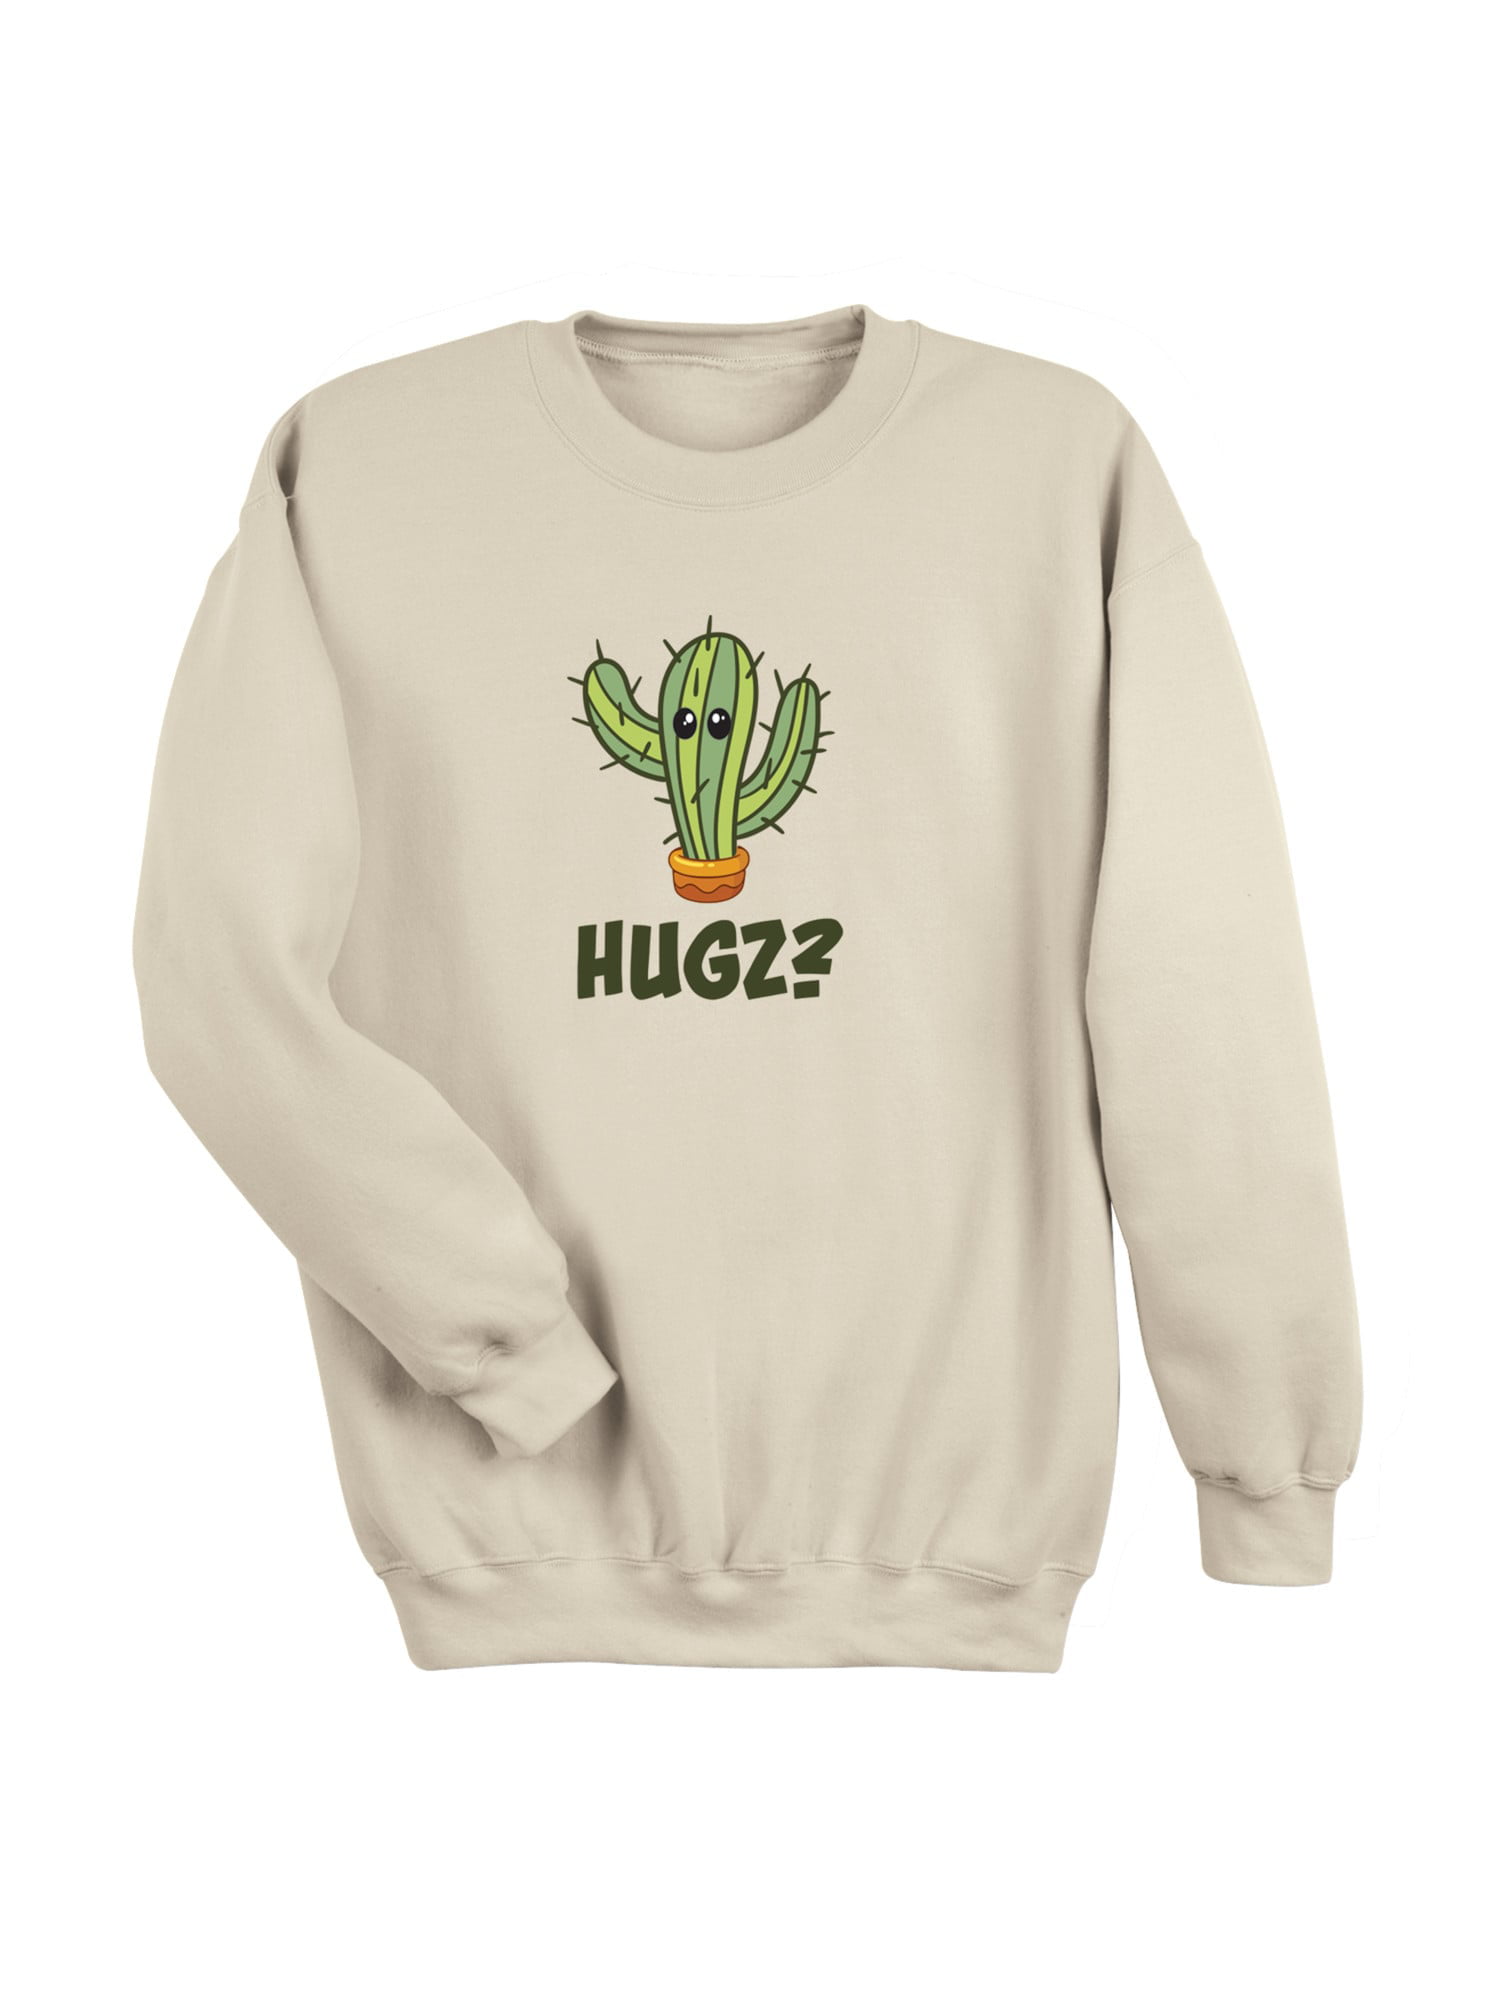 Funny Cactus Sweatshirt Funny Sweatshirt Hug Me Cactus Sweatshirt Cactus Lovers Sarcastic Sweatshirt Succulent Lovers Hoodie